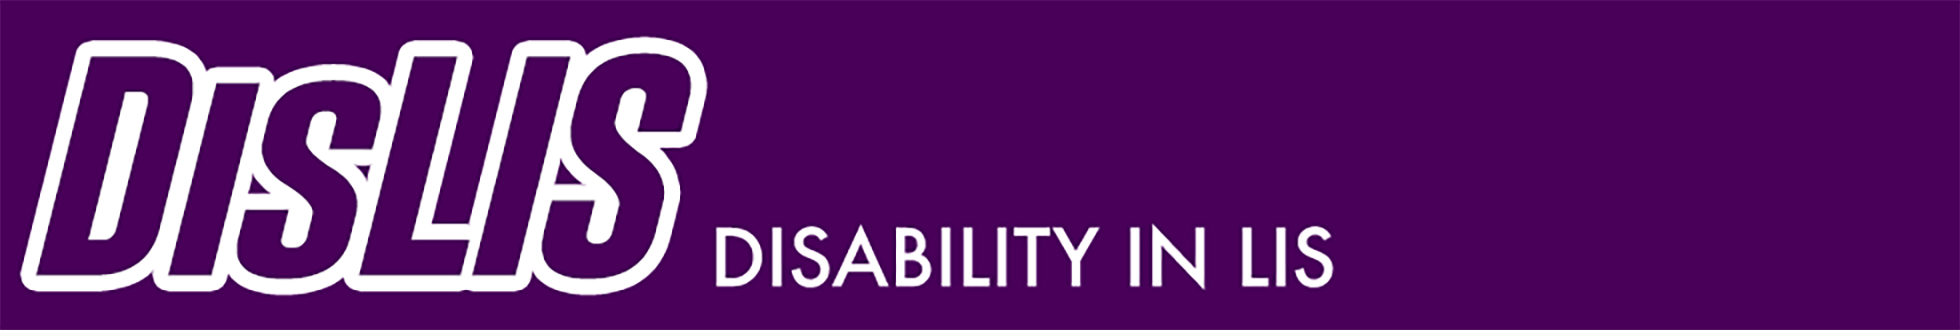 Disability in LIS (DisLIS)